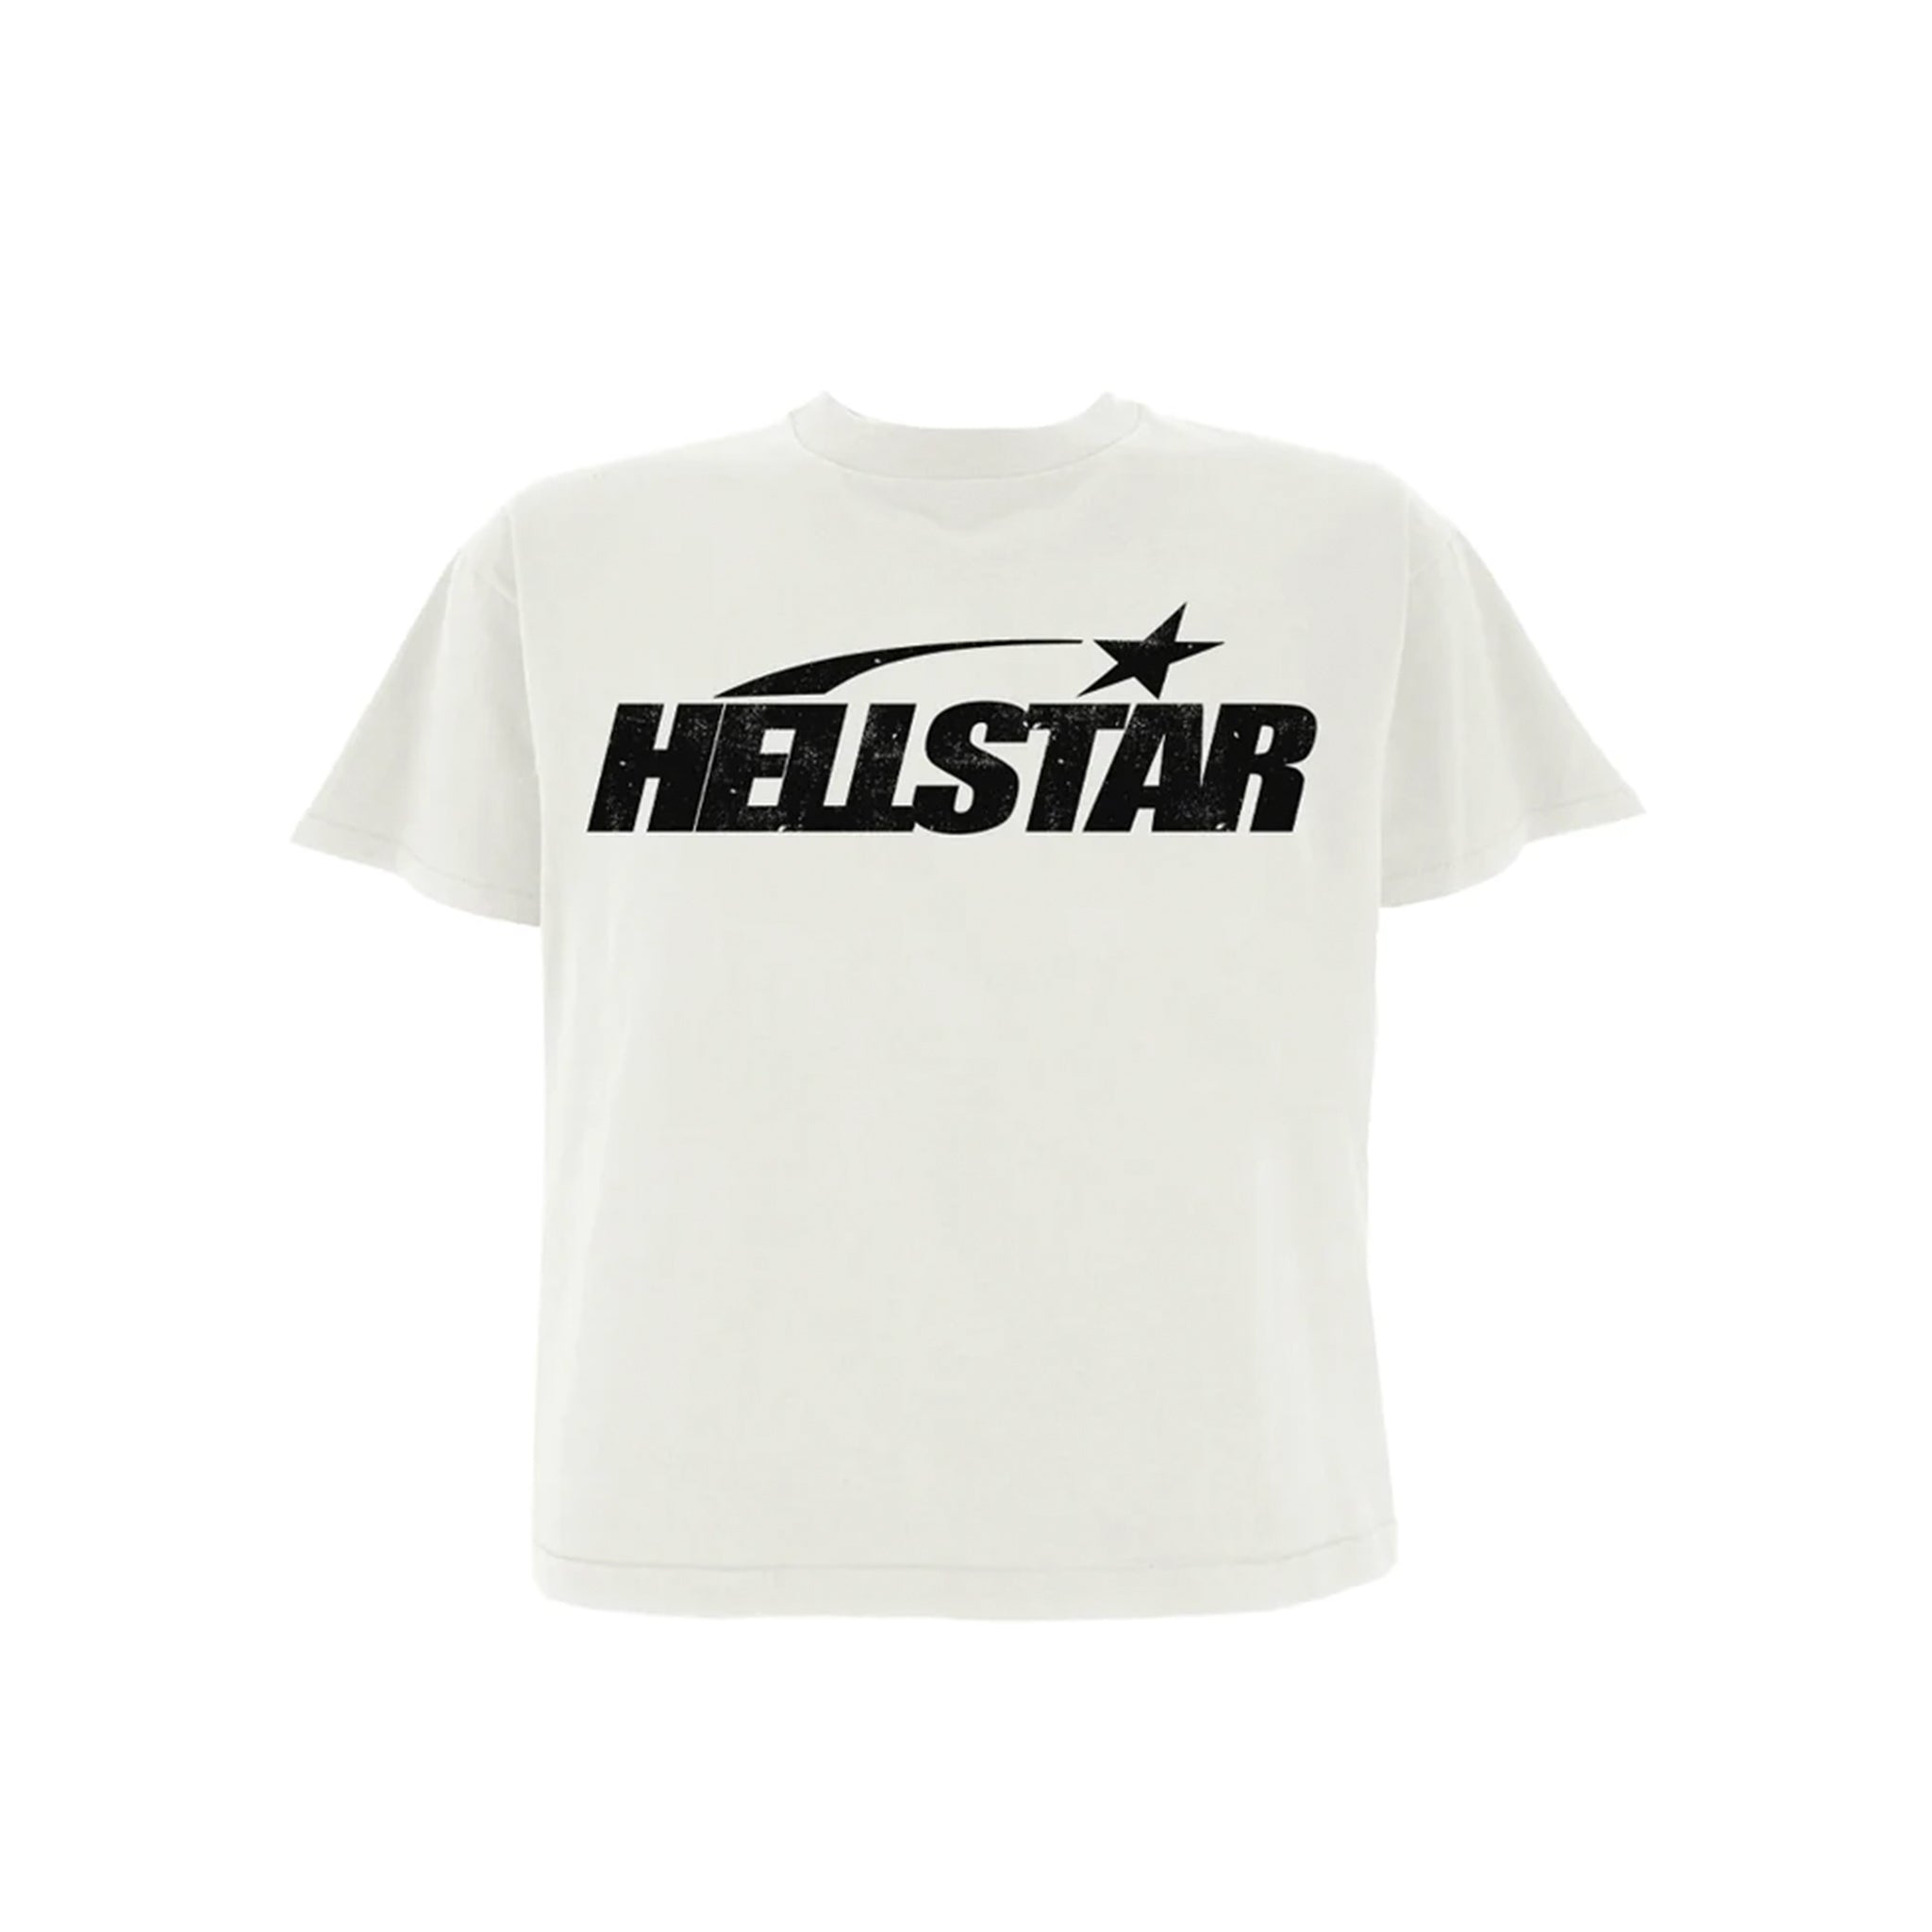 Hellstar Classic Tee White